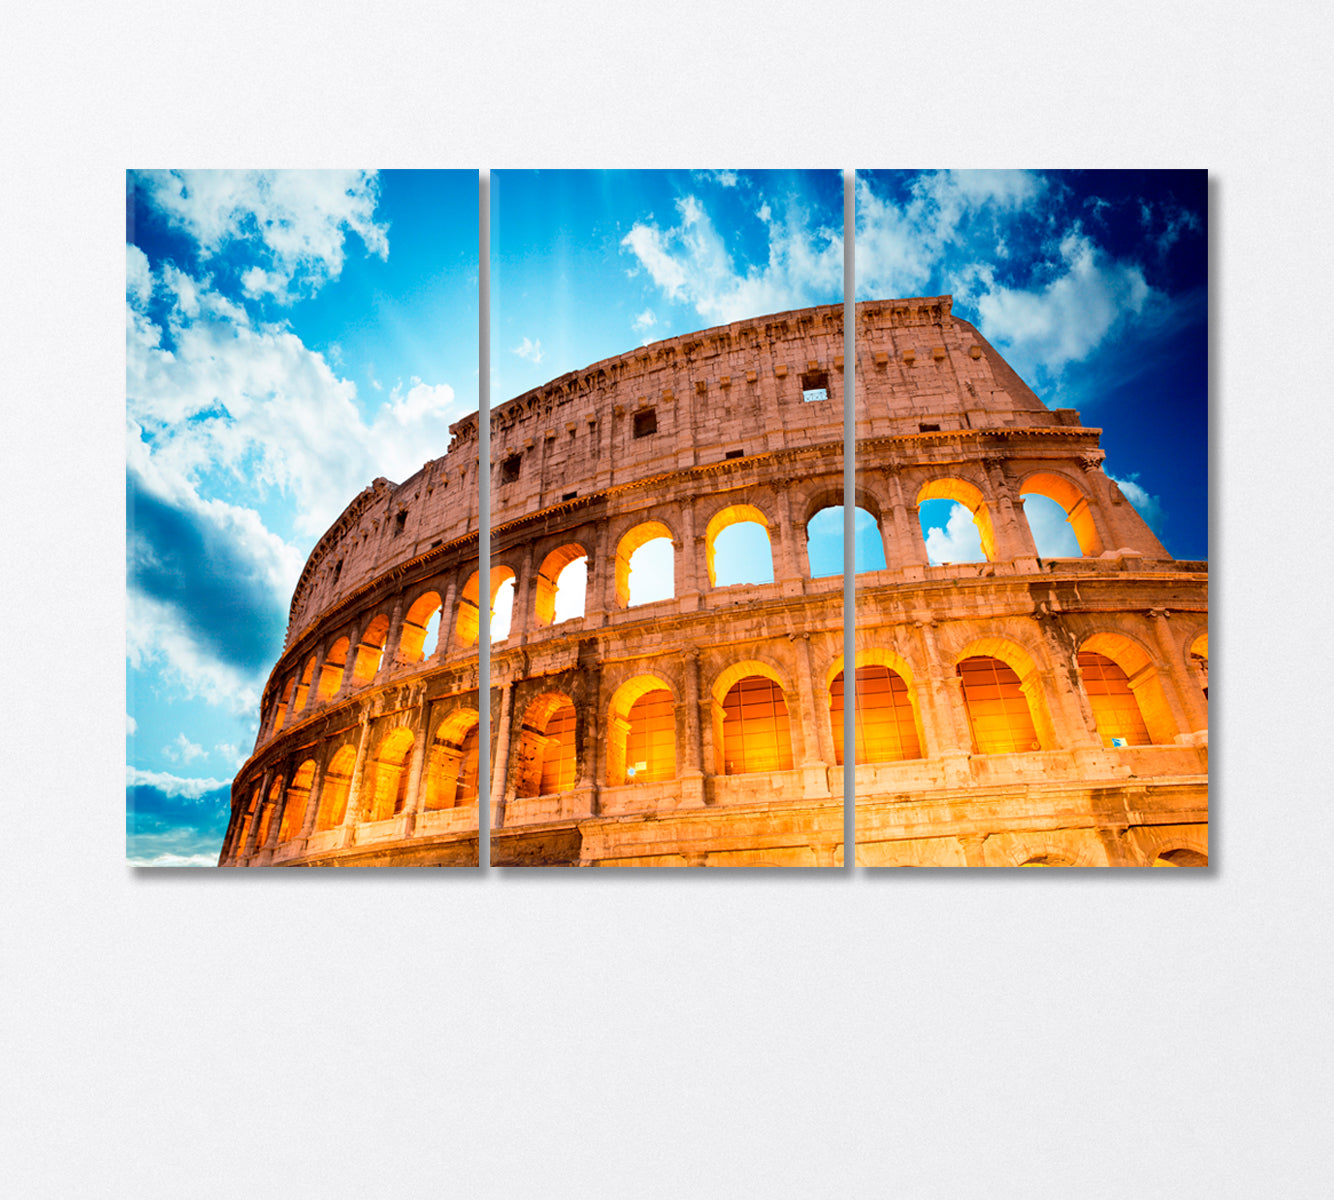 Colosseum Rome Italy Canvas Print-Canvas Print-CetArt-3 Panels-36x24 inches-CetArt